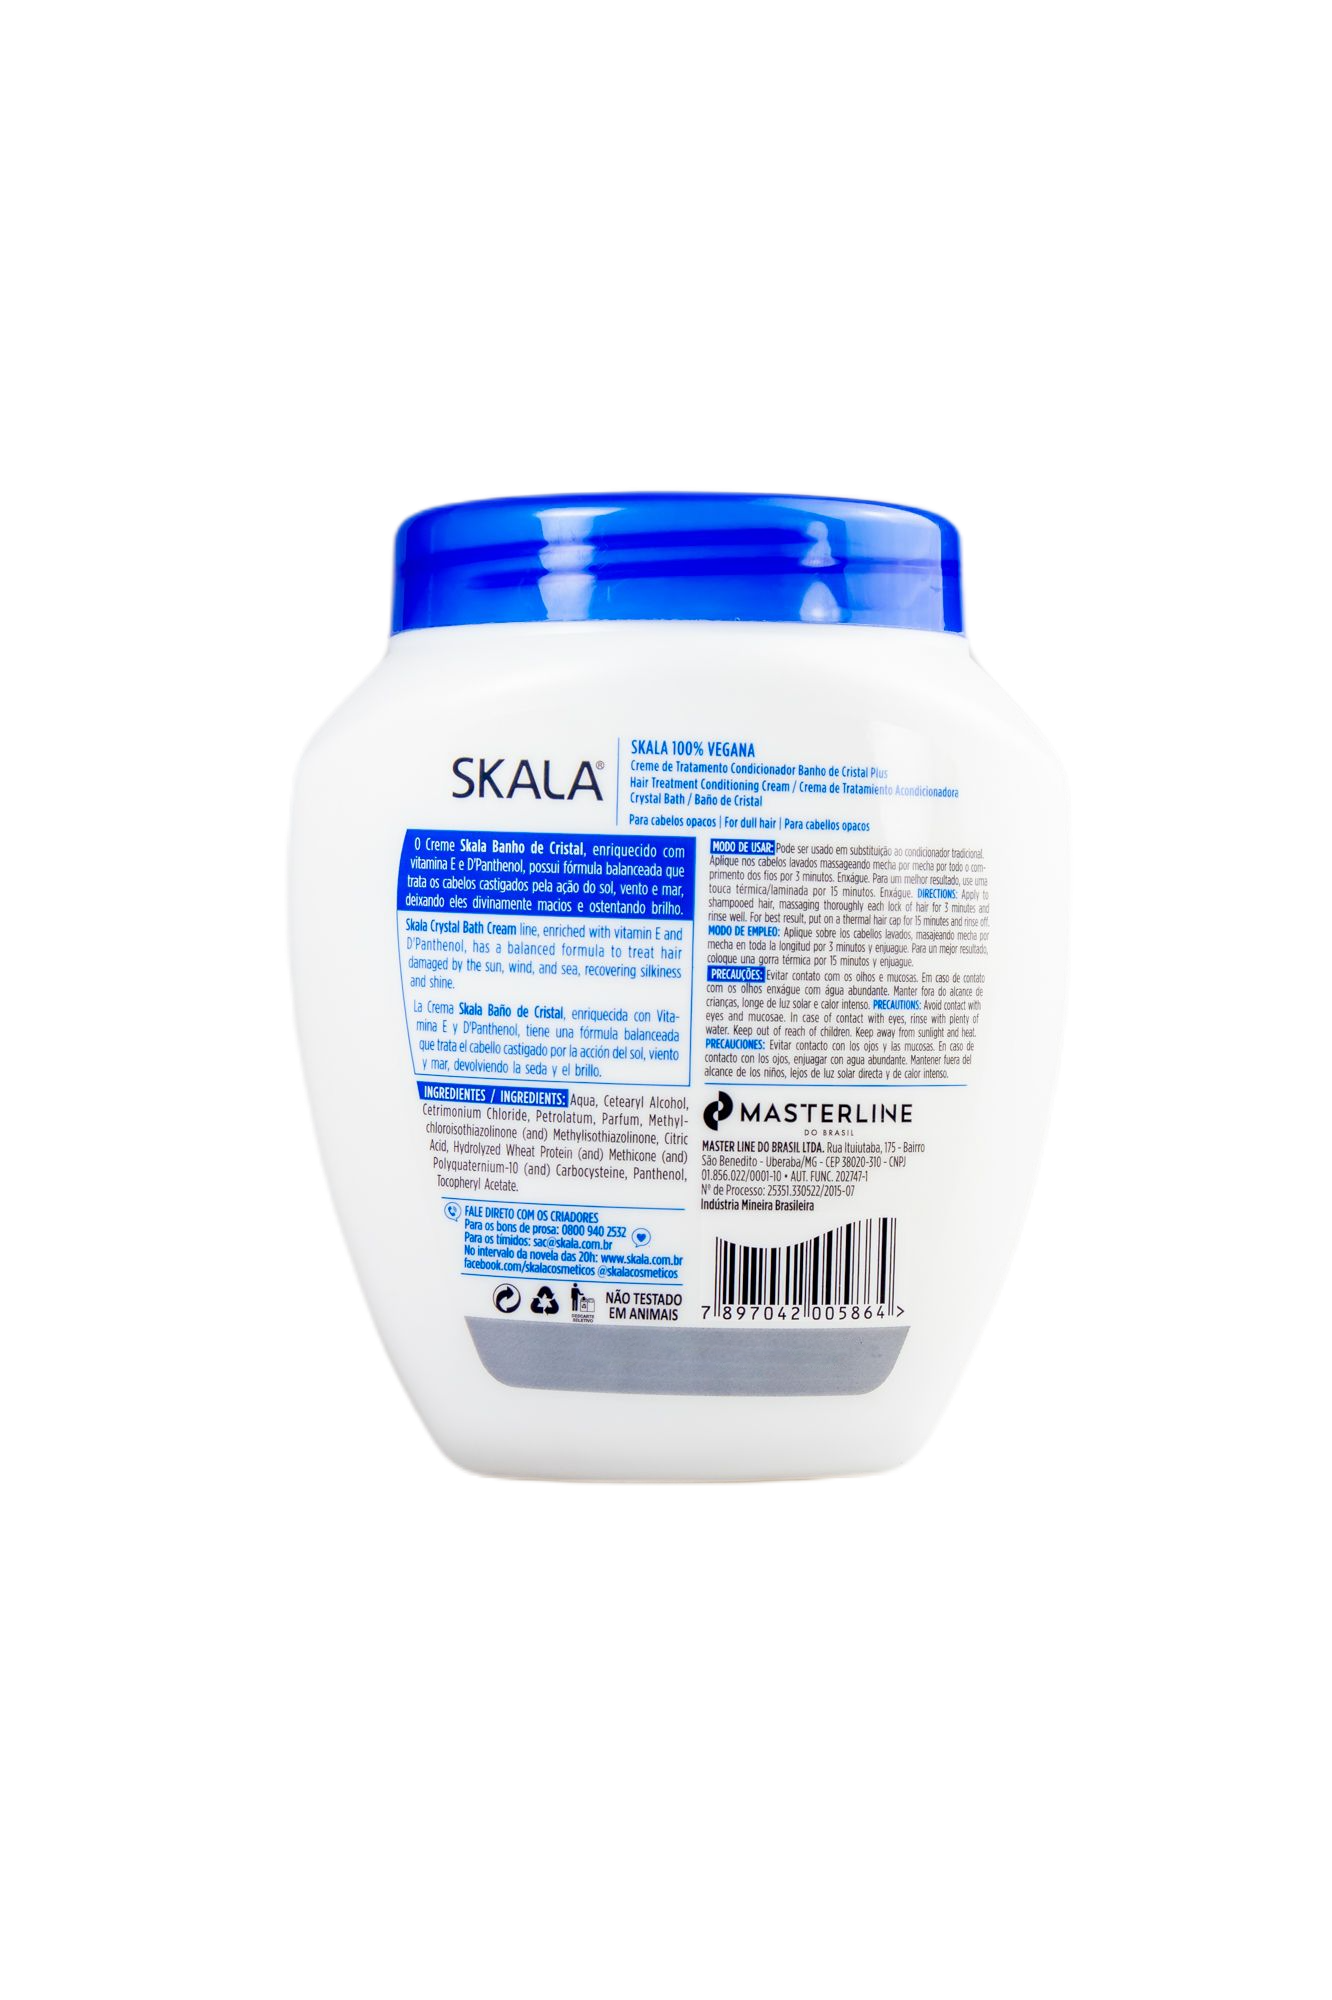 Skala Hair Mask Crystal Bath 3 Minutes Action Dull Hair Softness Treatment Cream 1kg - Skala